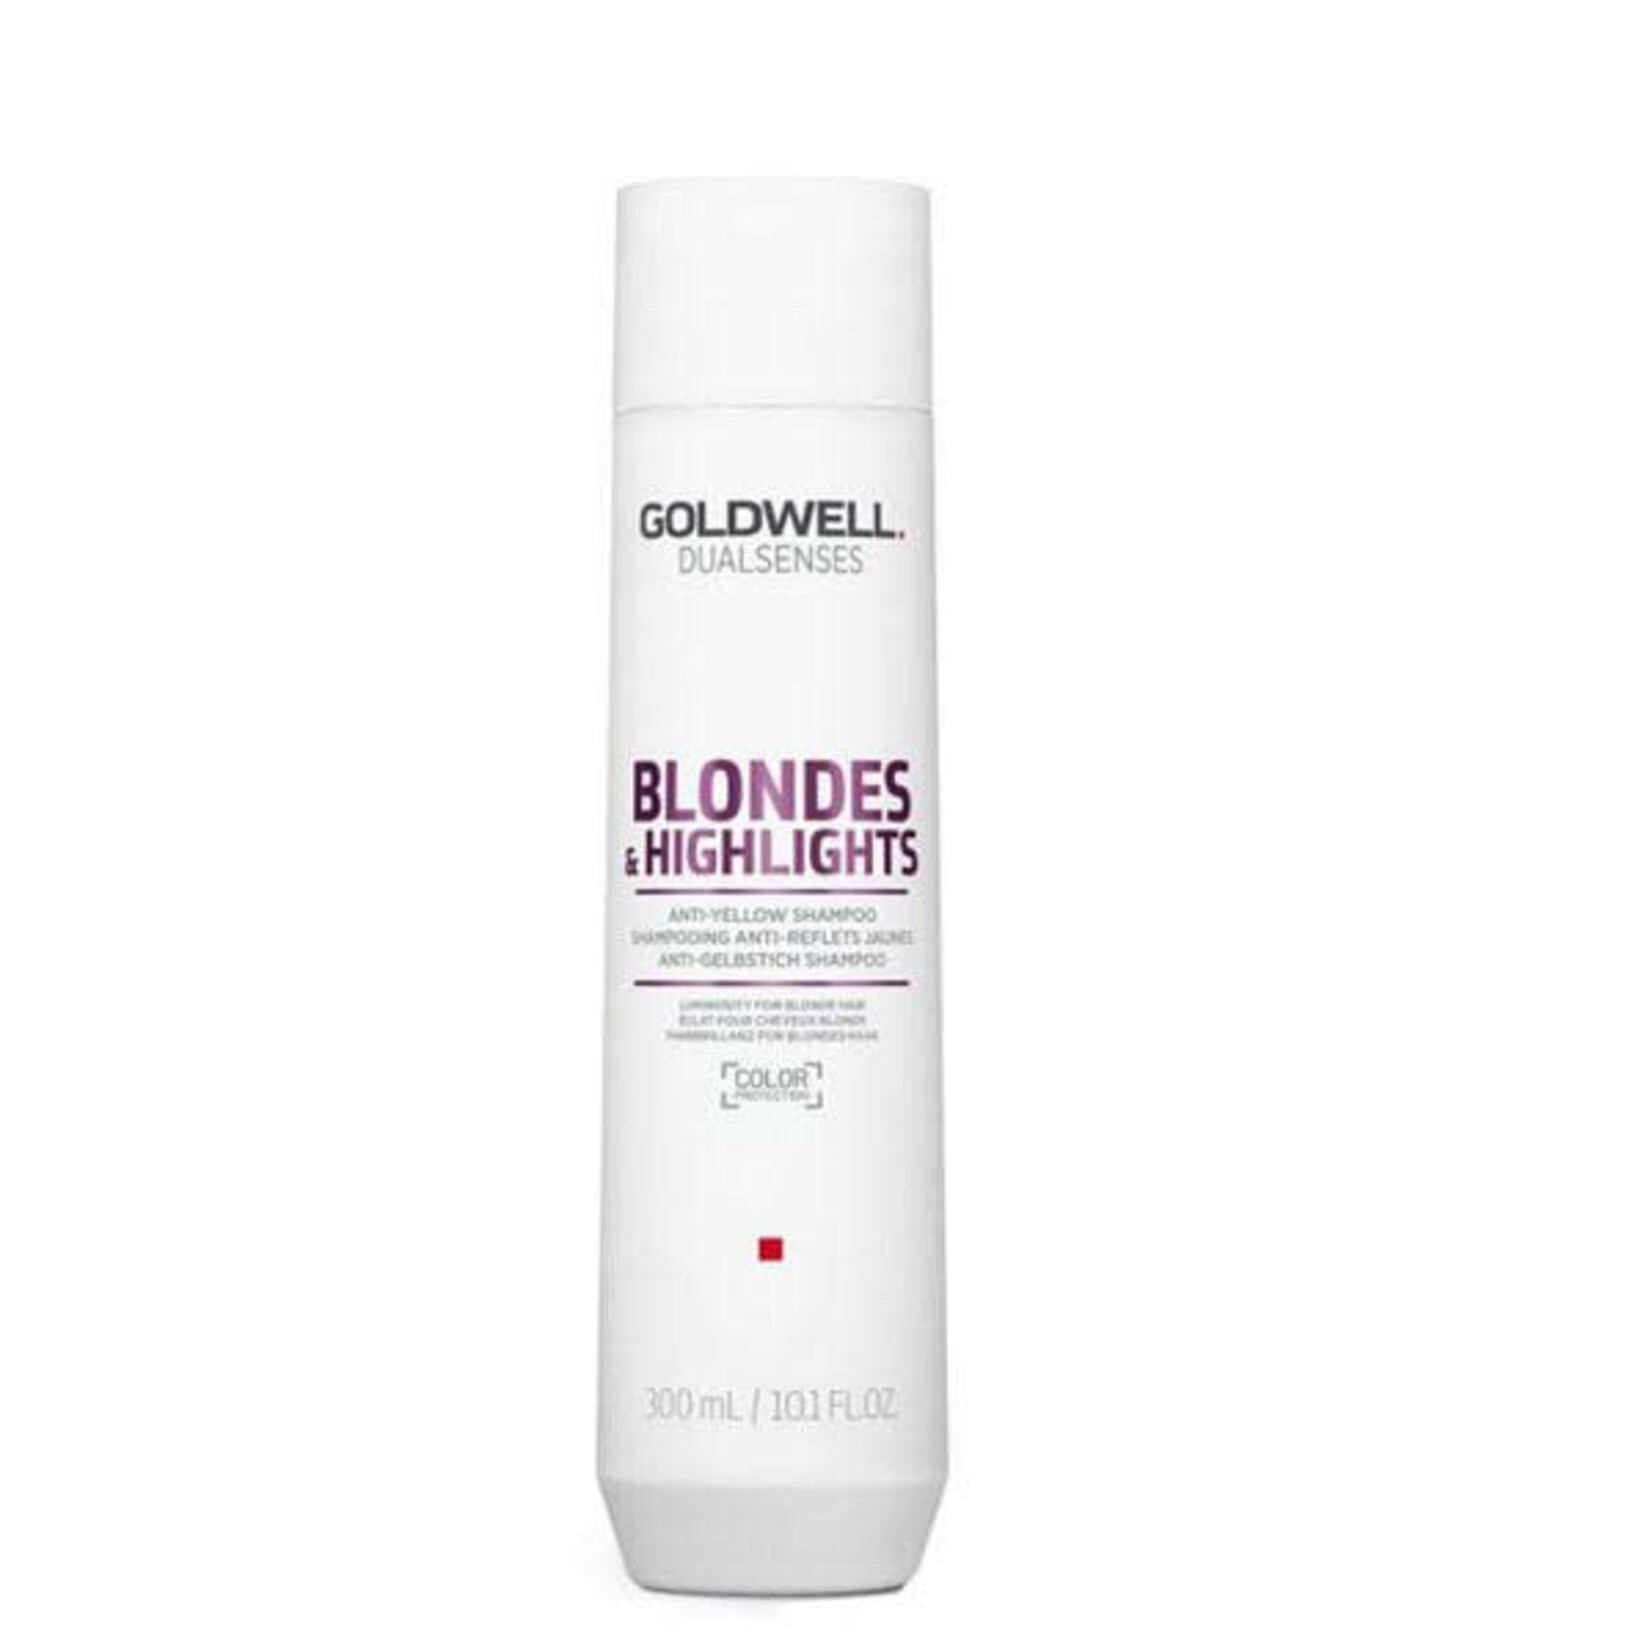 Goldwell Goldwell - Dualsenses - Blondes & Highlights - Anti-Yellow Shampoo 300ml